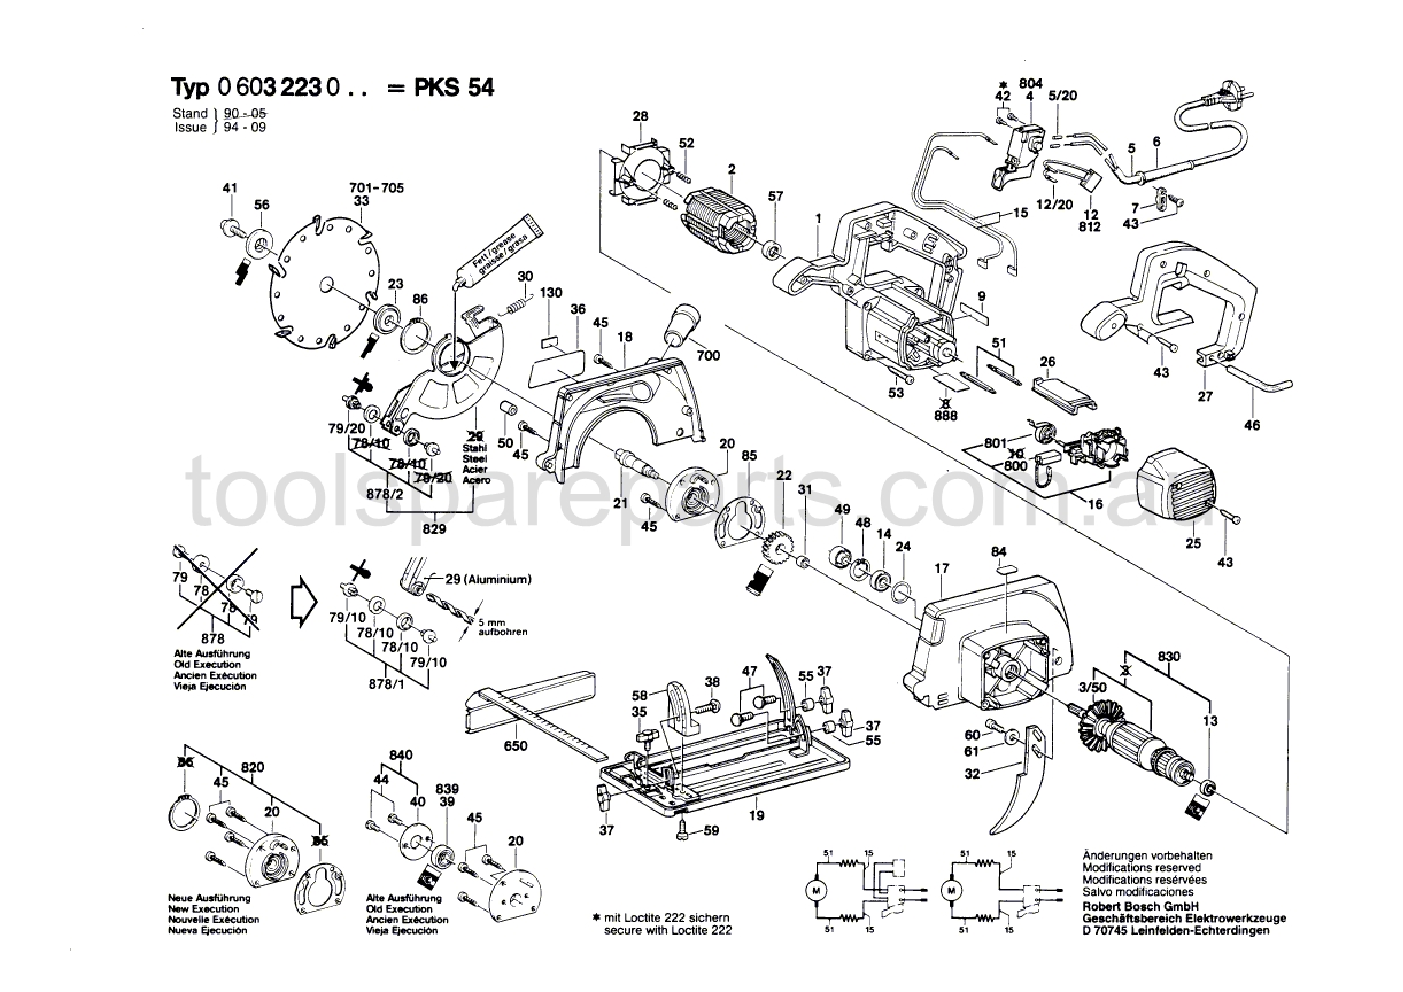 Bosch PKS 54 0603223037  Diagram 1